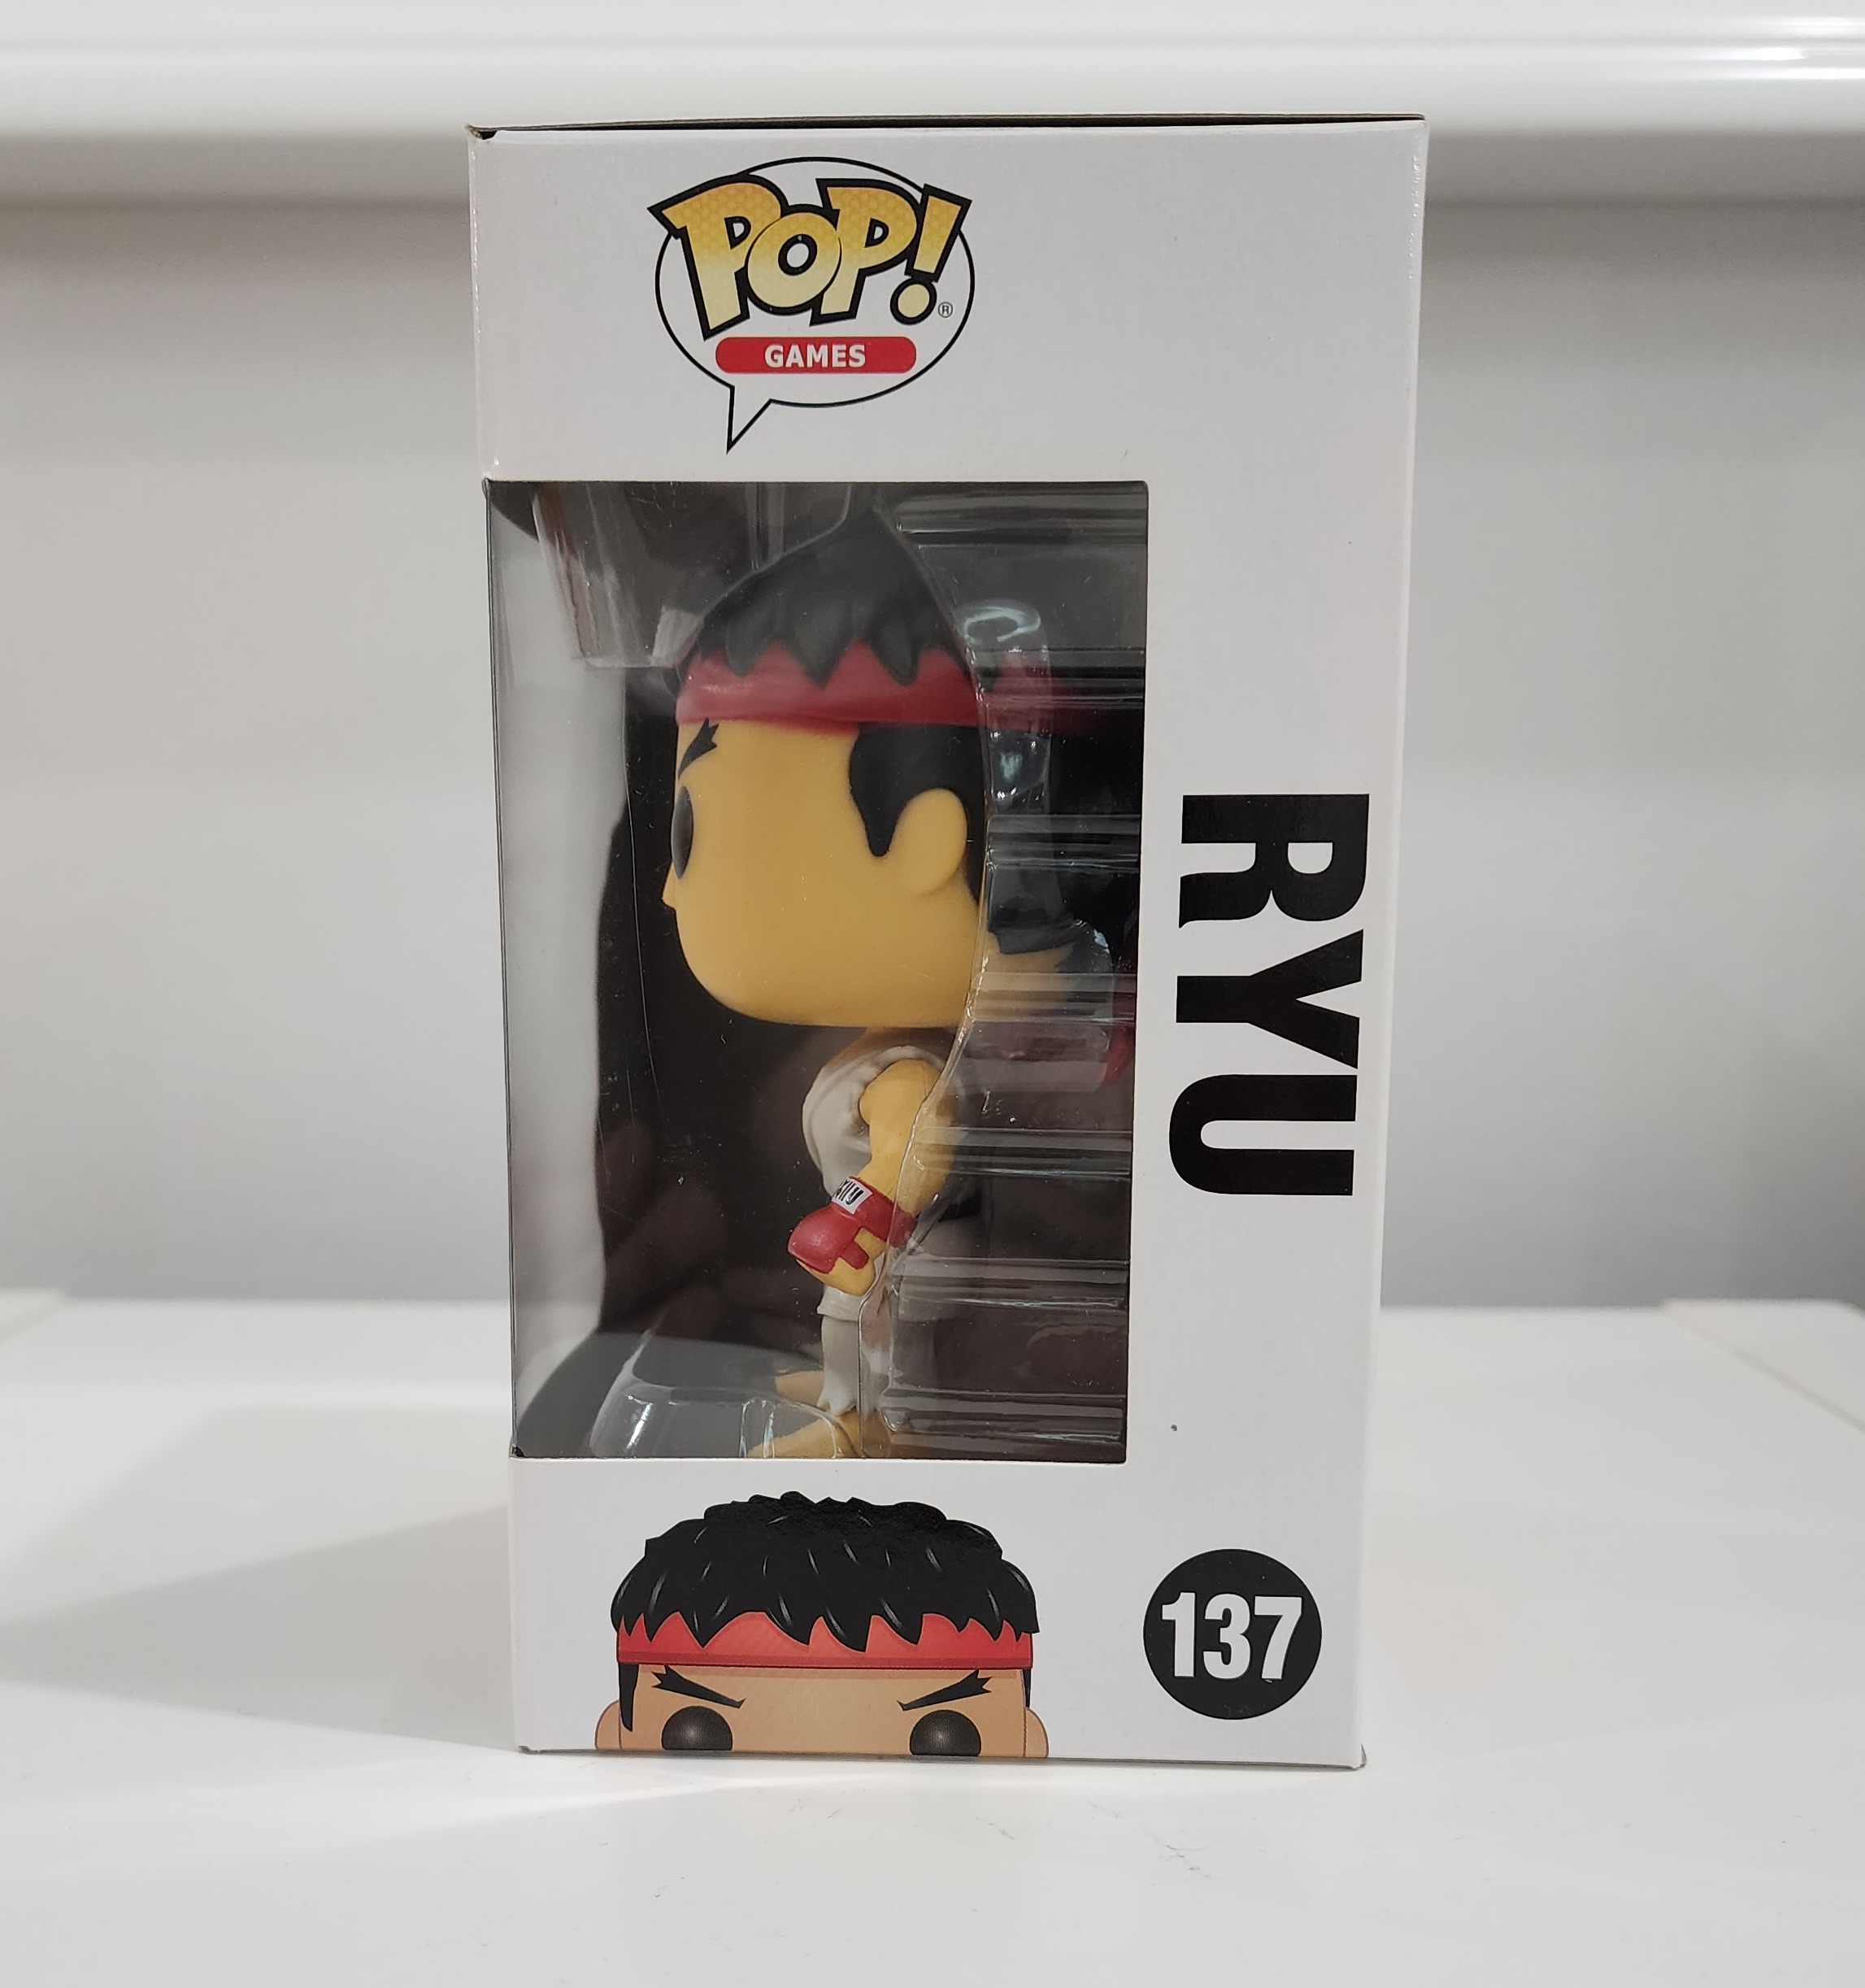 Ryu funko pop